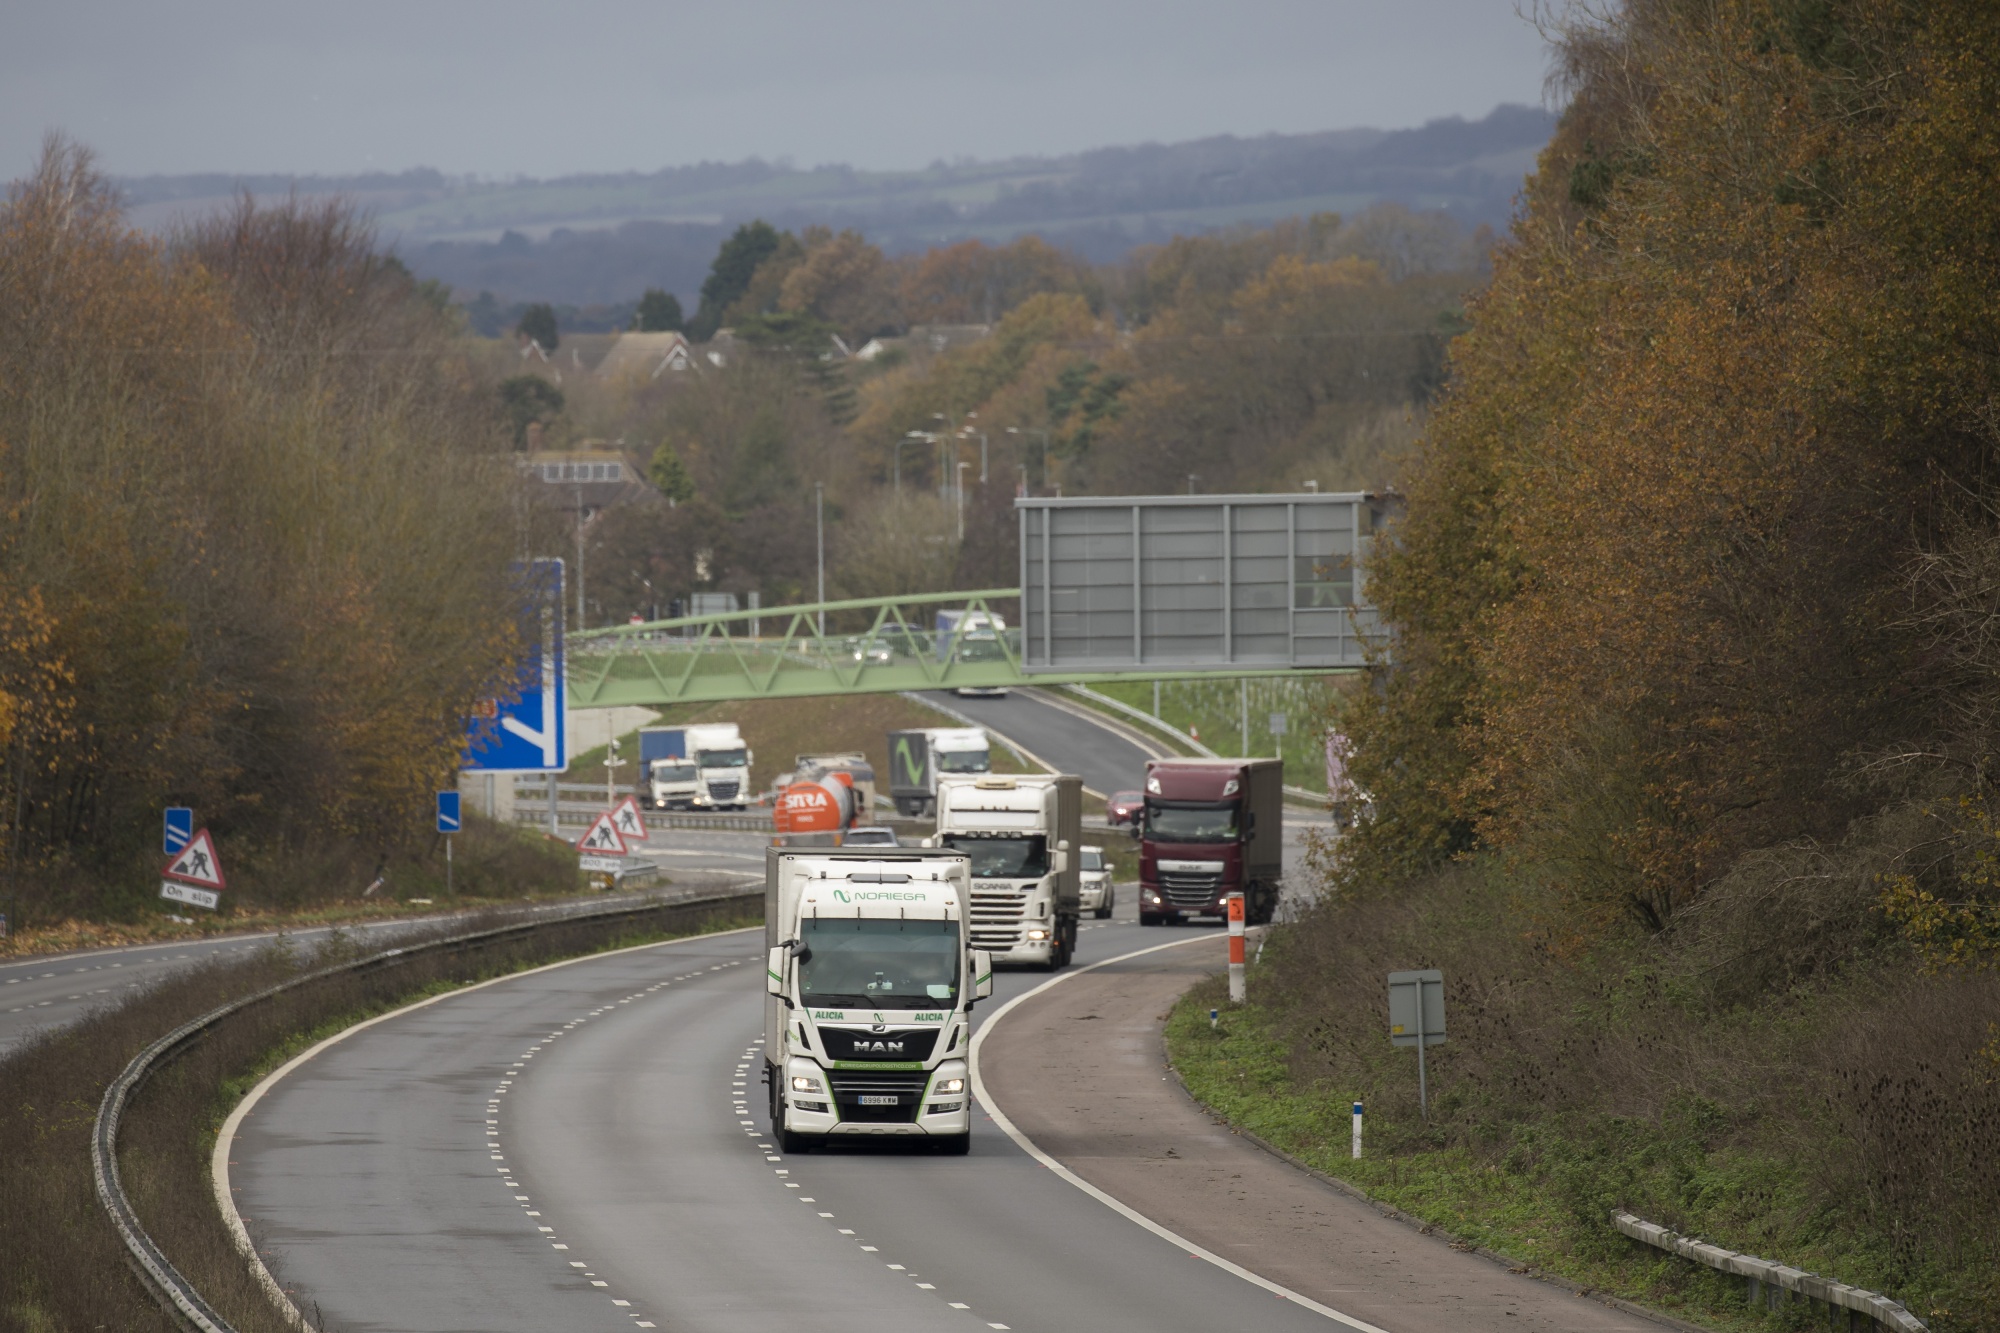 Traffic on M20 motorway near Folkestone, Kent.